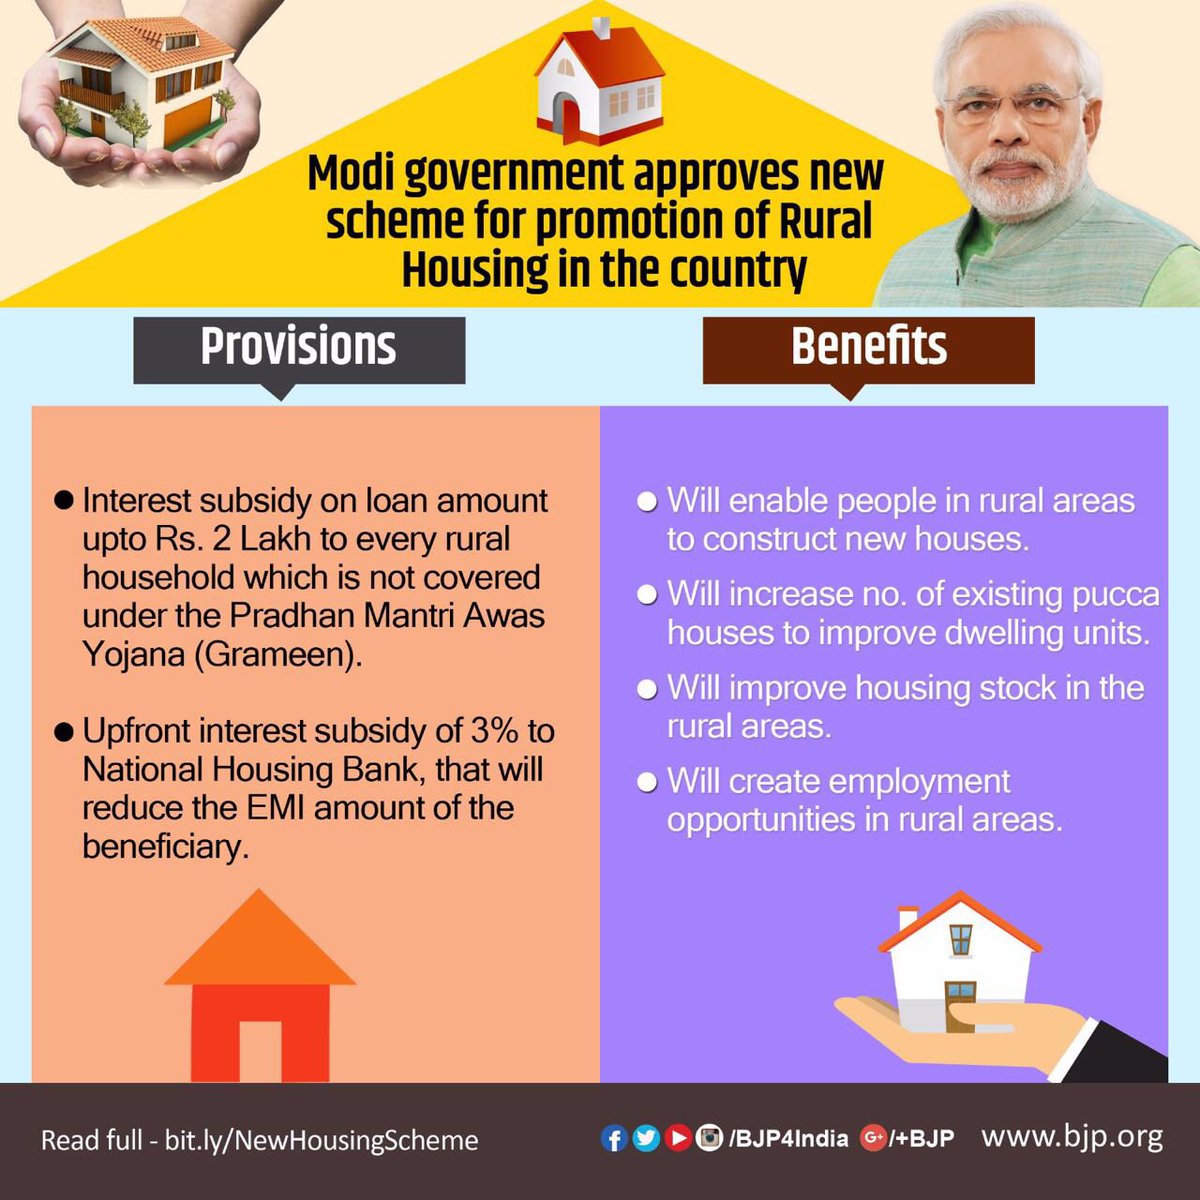 Modi government approves new rural housing scheme